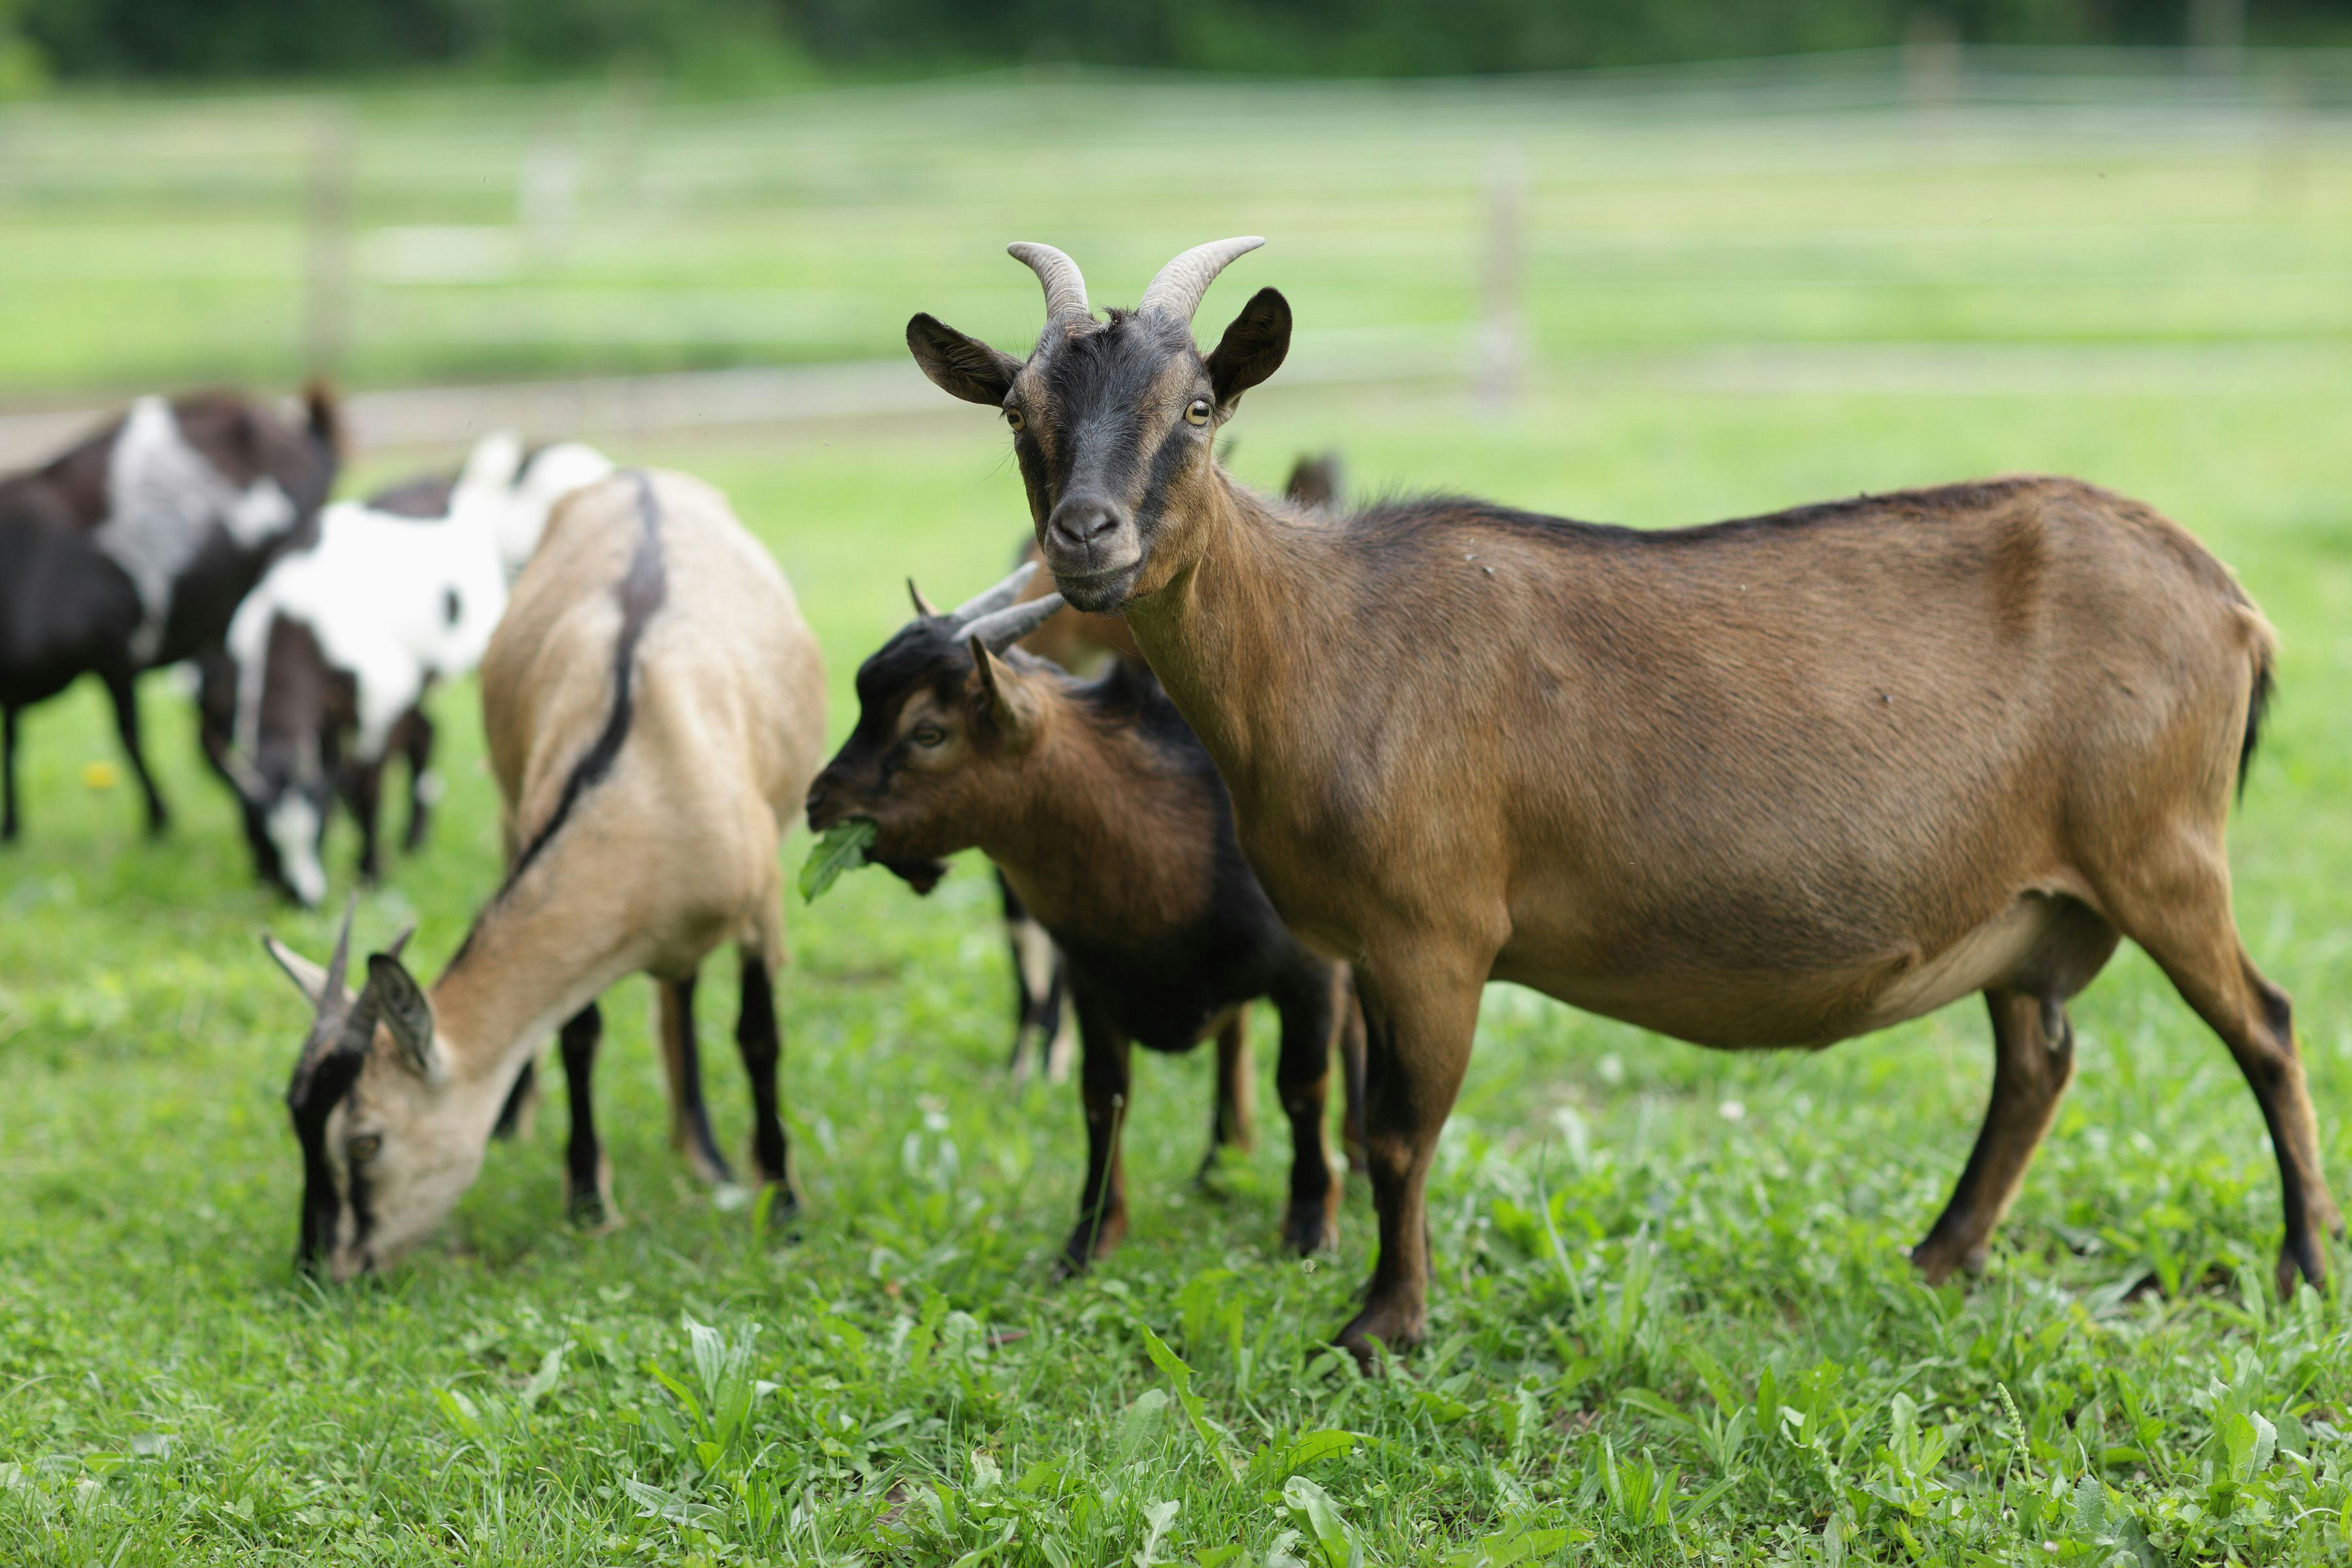 Family goat | Image Credit: © stokkete - stock.adobe.com